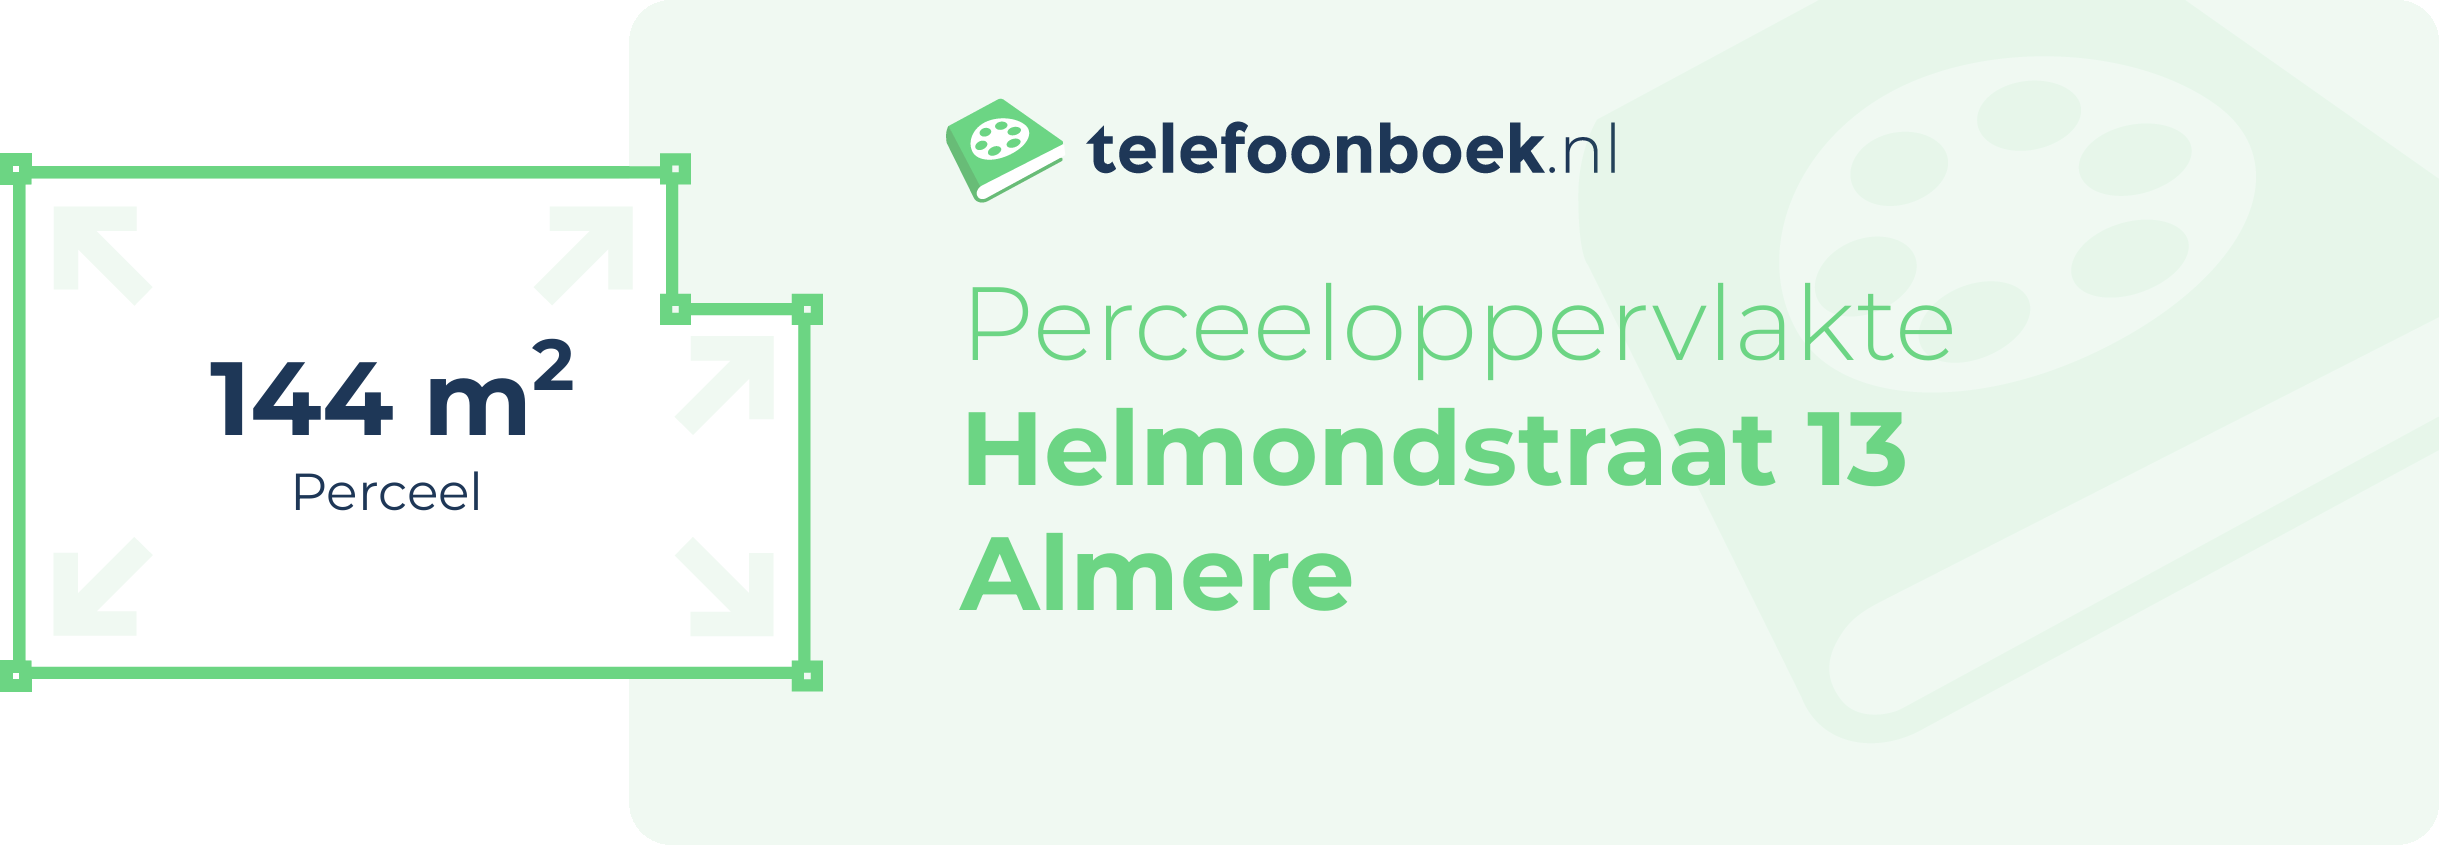 Perceeloppervlakte Helmondstraat 13 Almere